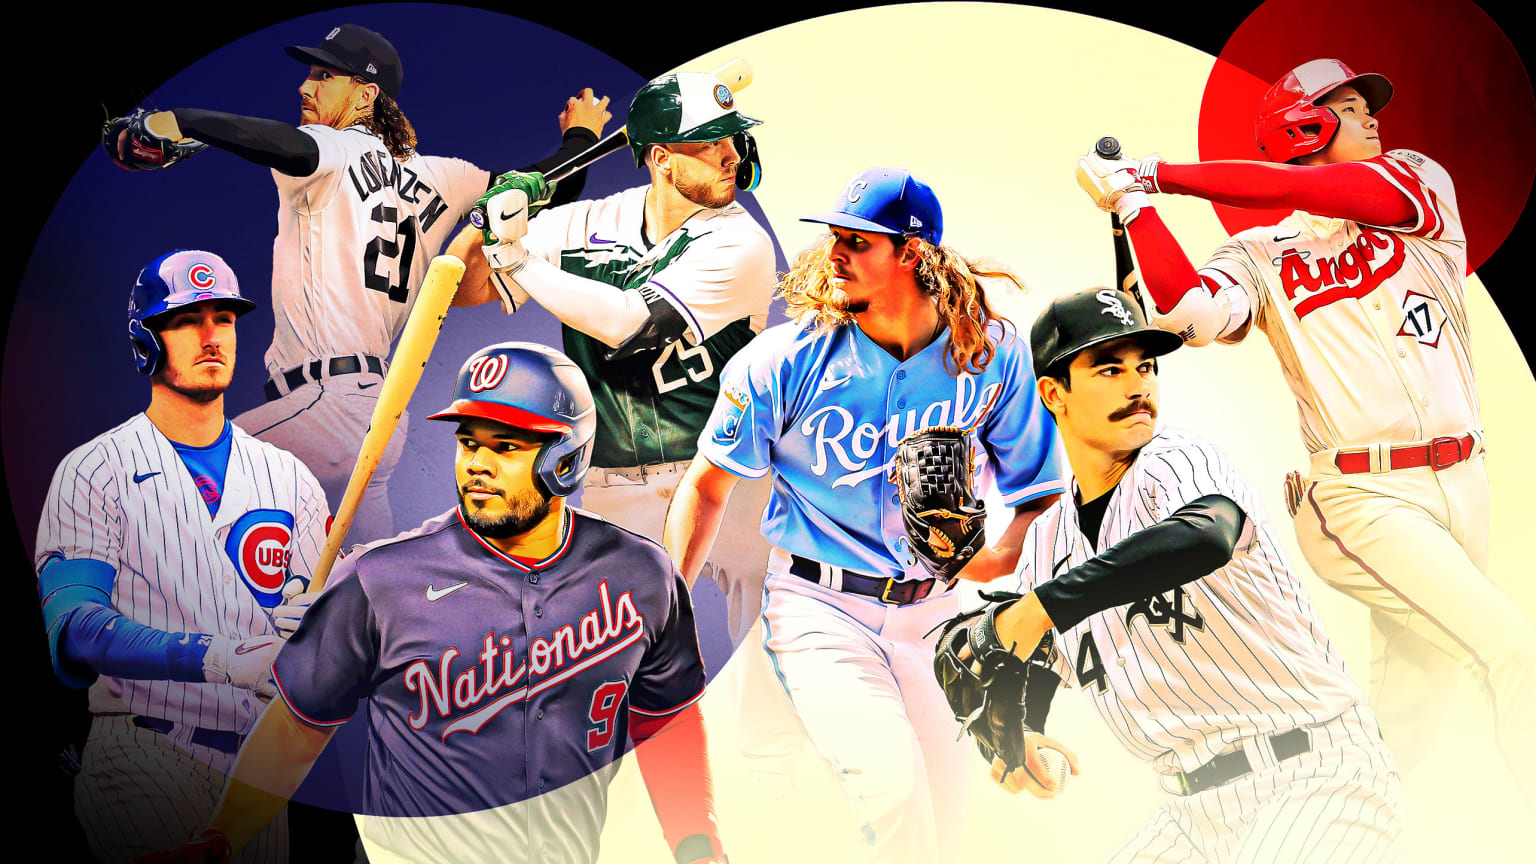 Designed image showing several MLB trade candidates